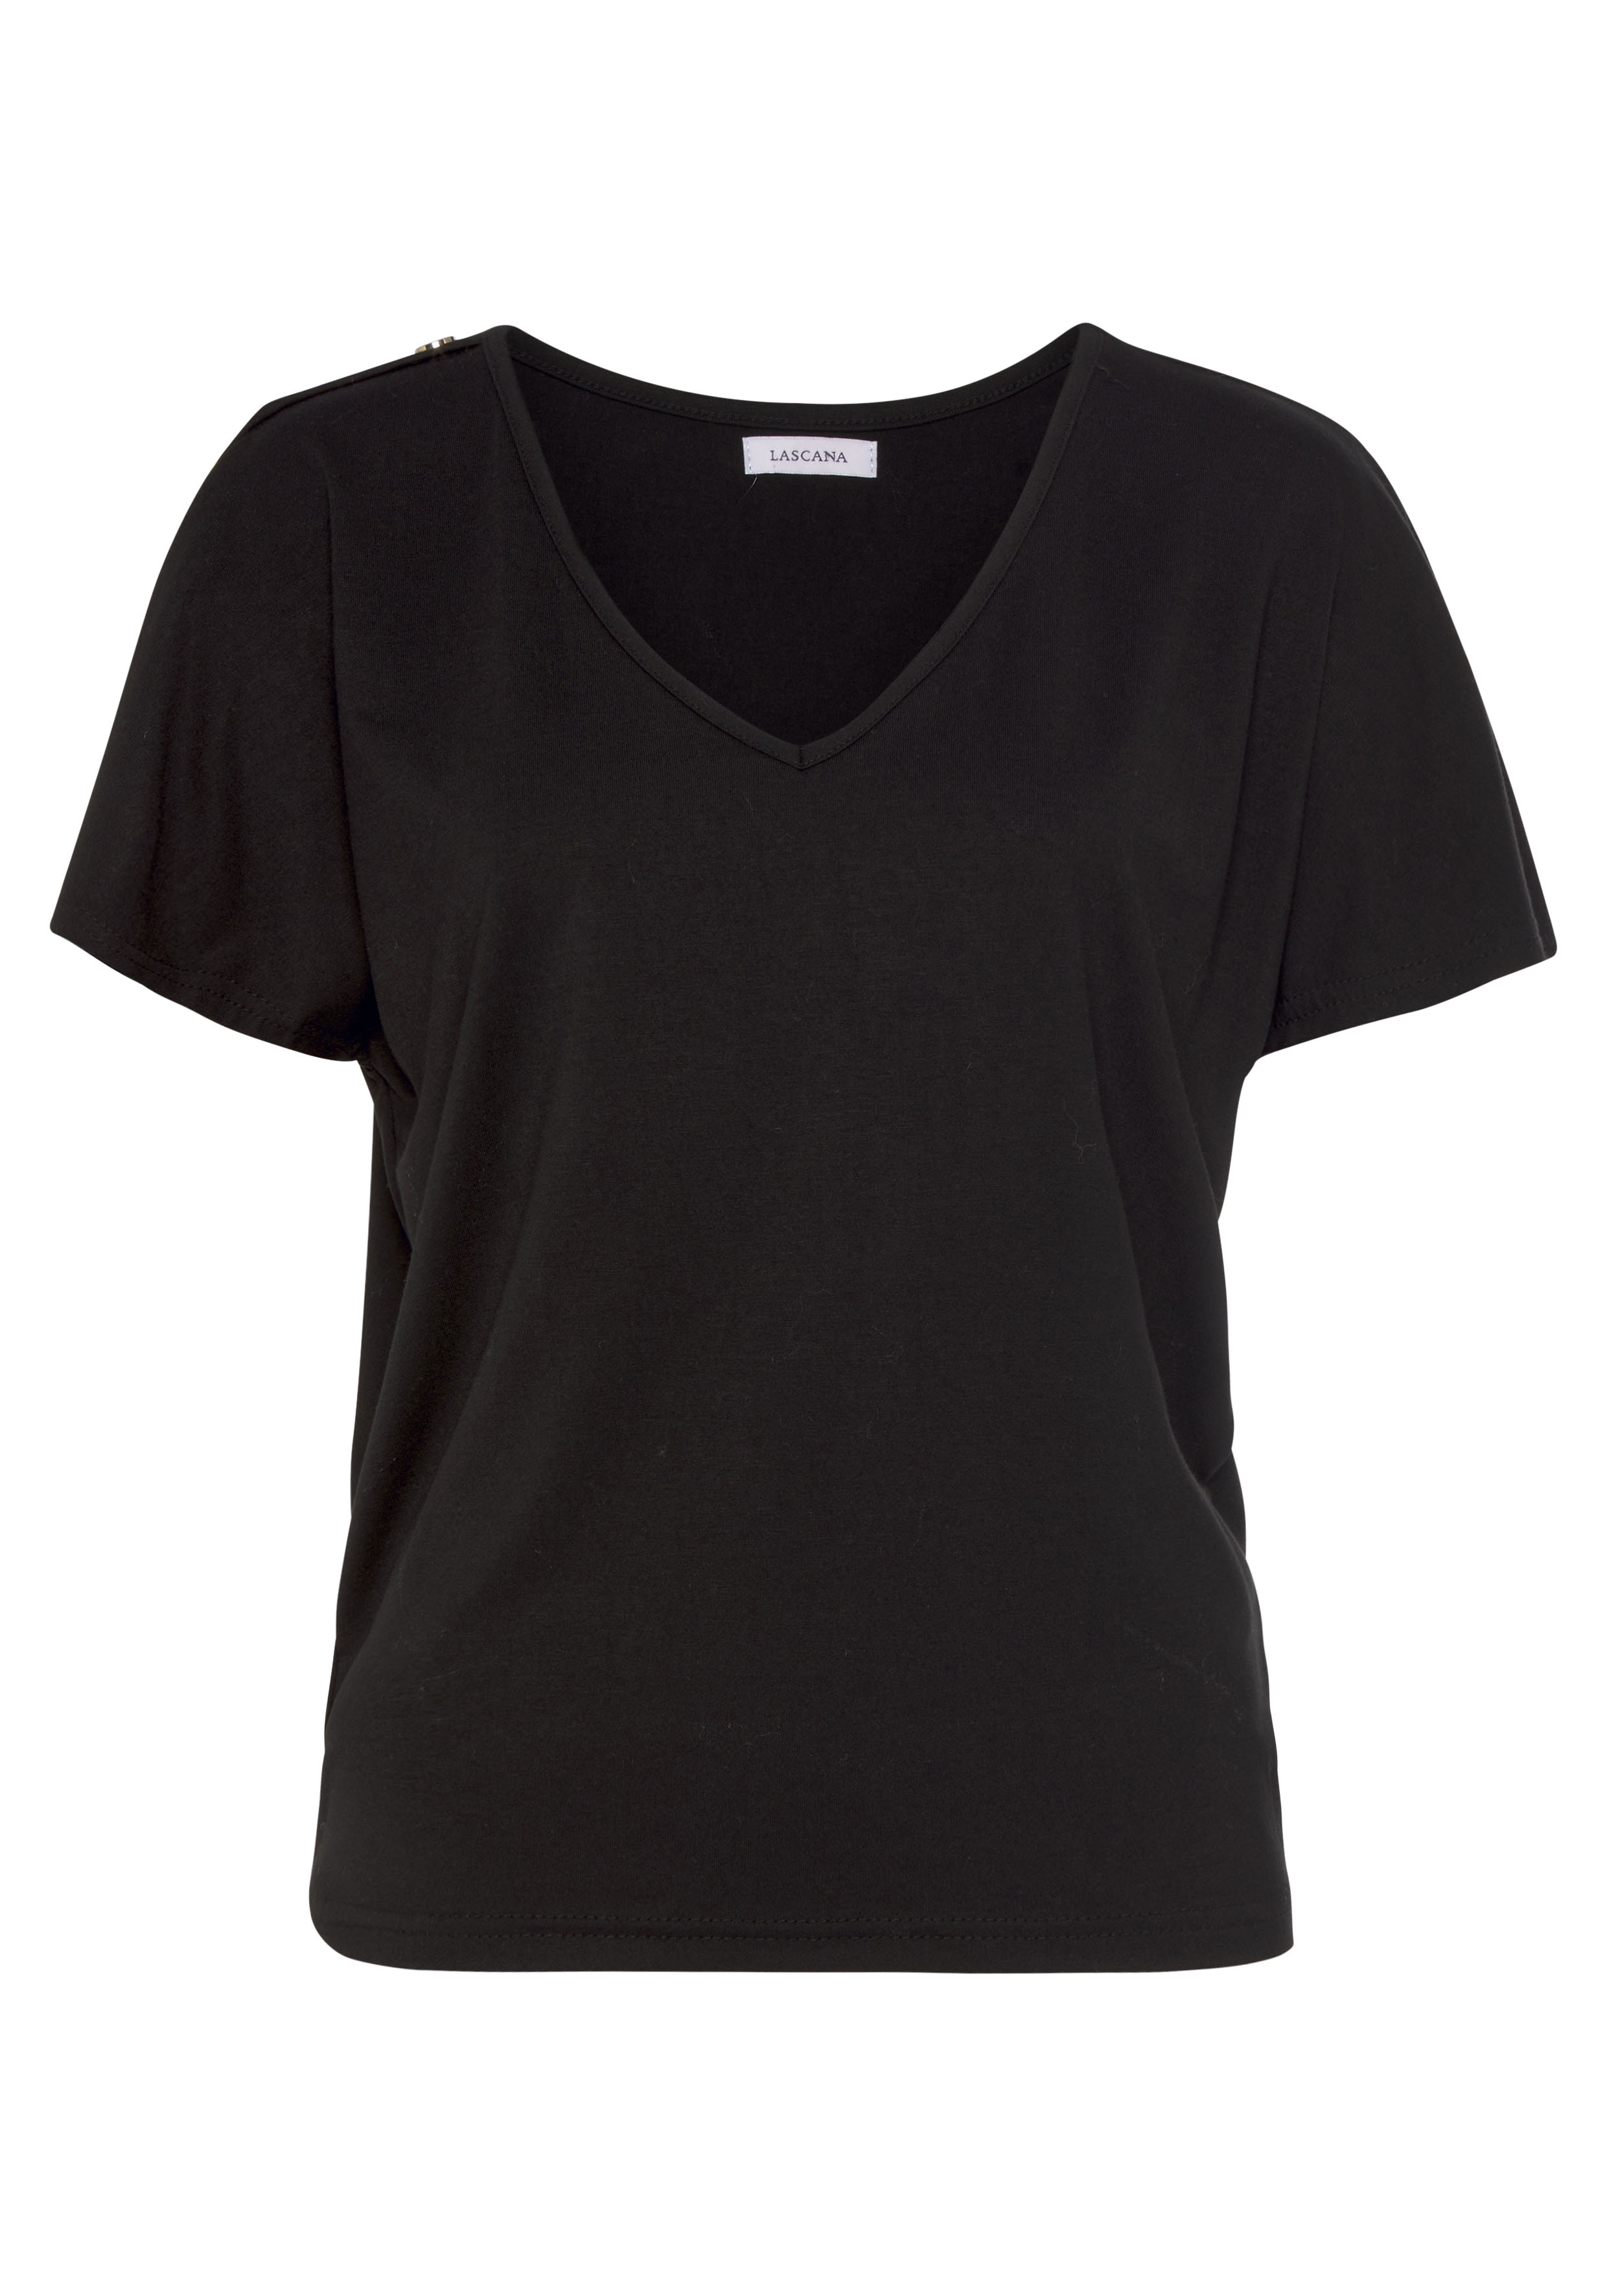 LASCANA Kurzarmshirt, mit Ziernieten an den Ärmeln » LASCANA | Bademode,  Unterwäsche & Lingerie online kaufen